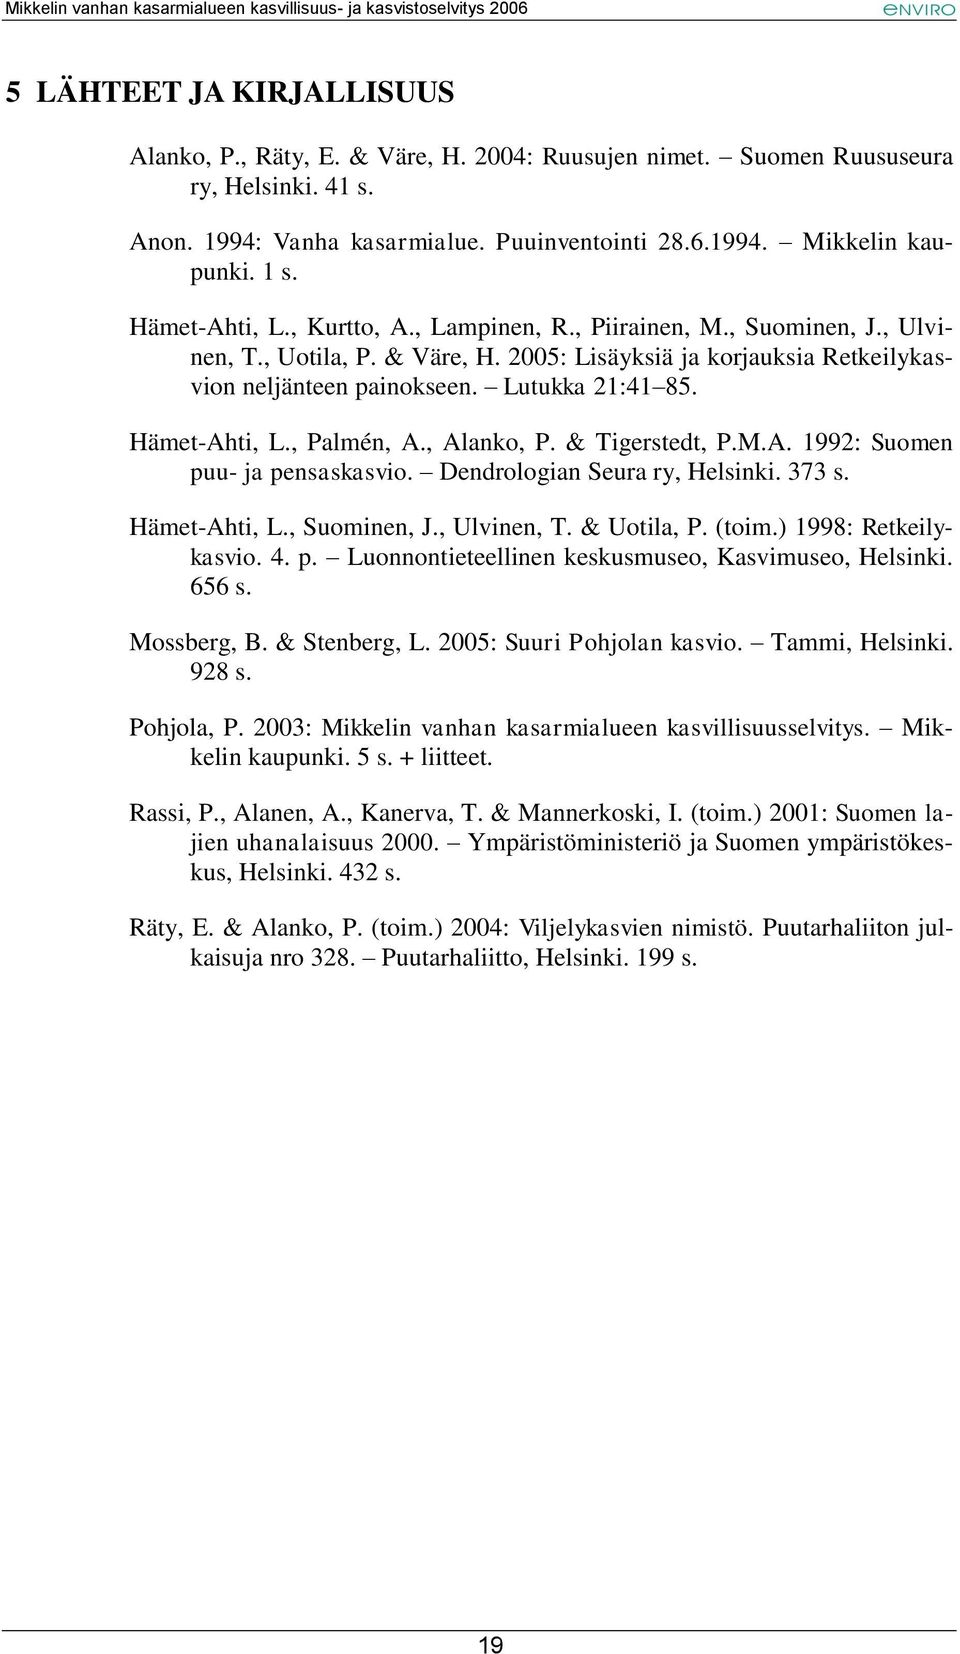 Hämet-Ahti, L., Palmén, A., Alanko, P. & Tigerstedt, P.M.A. 1992: Suomen puu- ja pensaskasvio. Dendrologian Seura ry, Helsinki. 373 s. Hämet-Ahti, L., Suominen, J., Ulvinen, T. & Uotila, P. (toim.